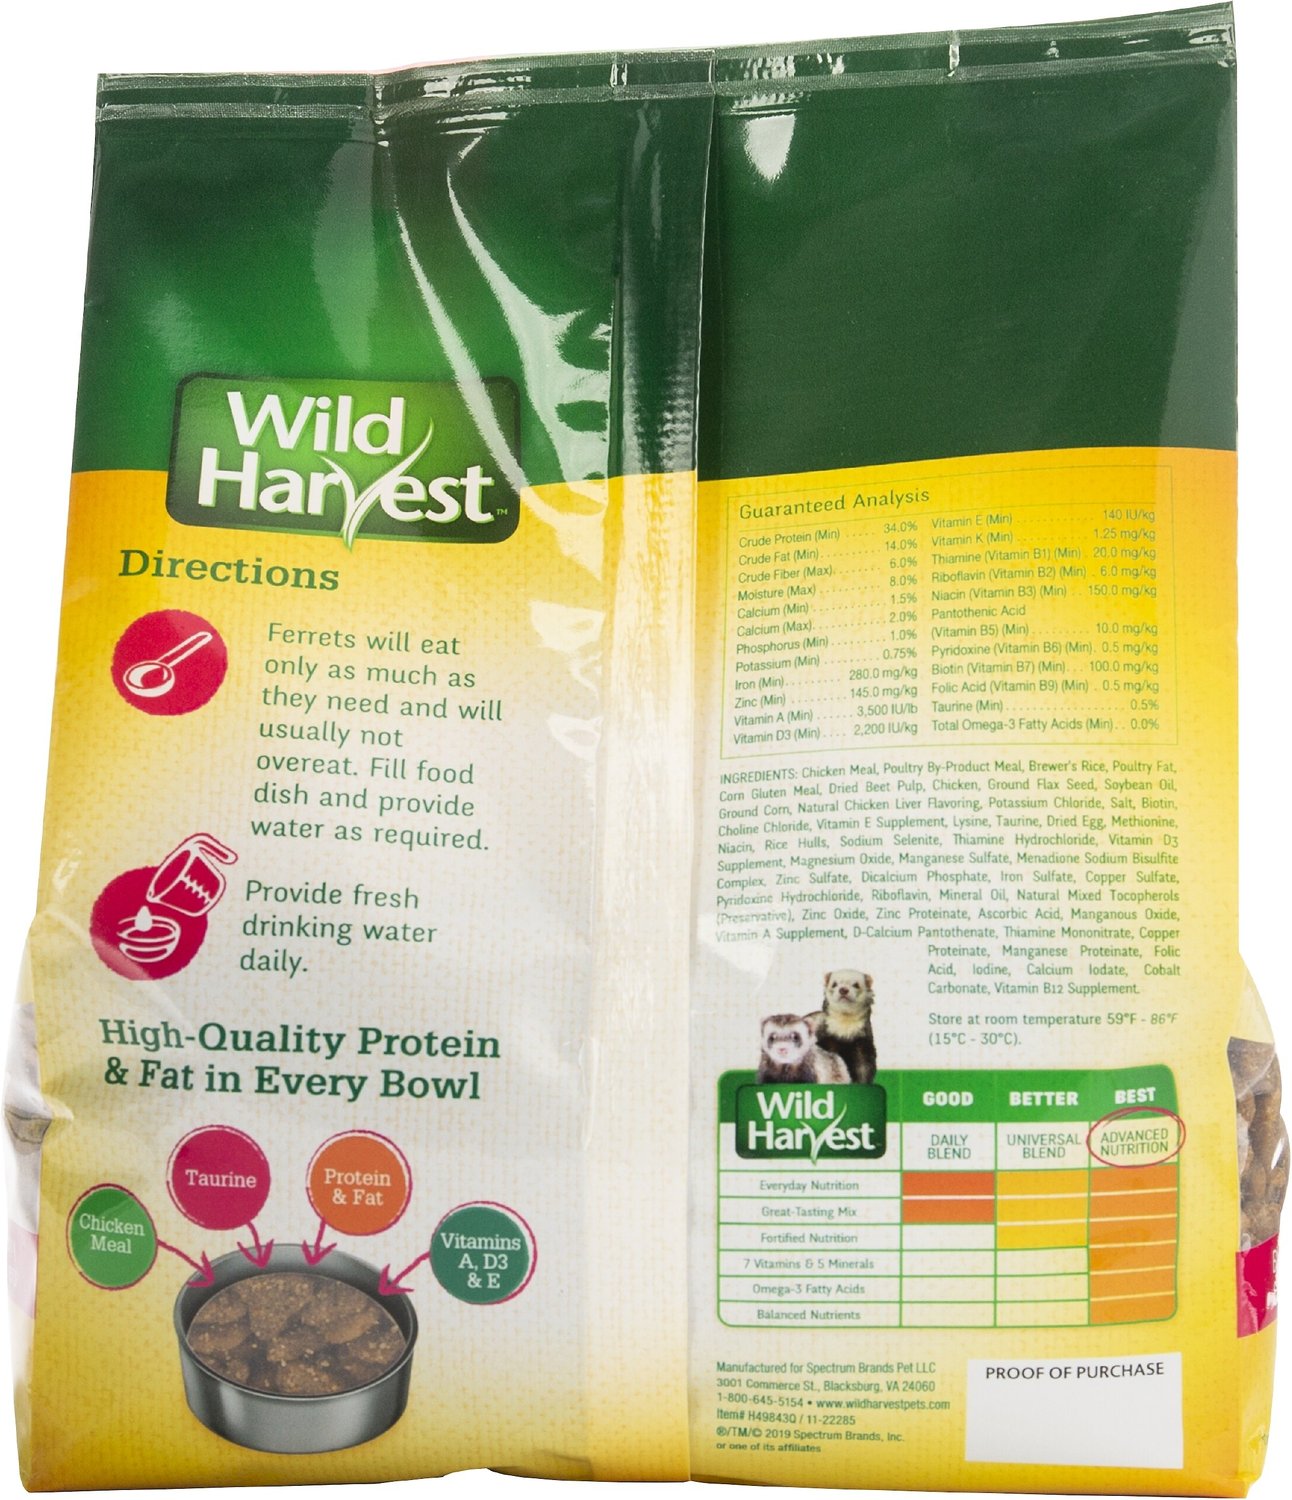 8. Wild Harvest Advanced Nutrition Ferret Food